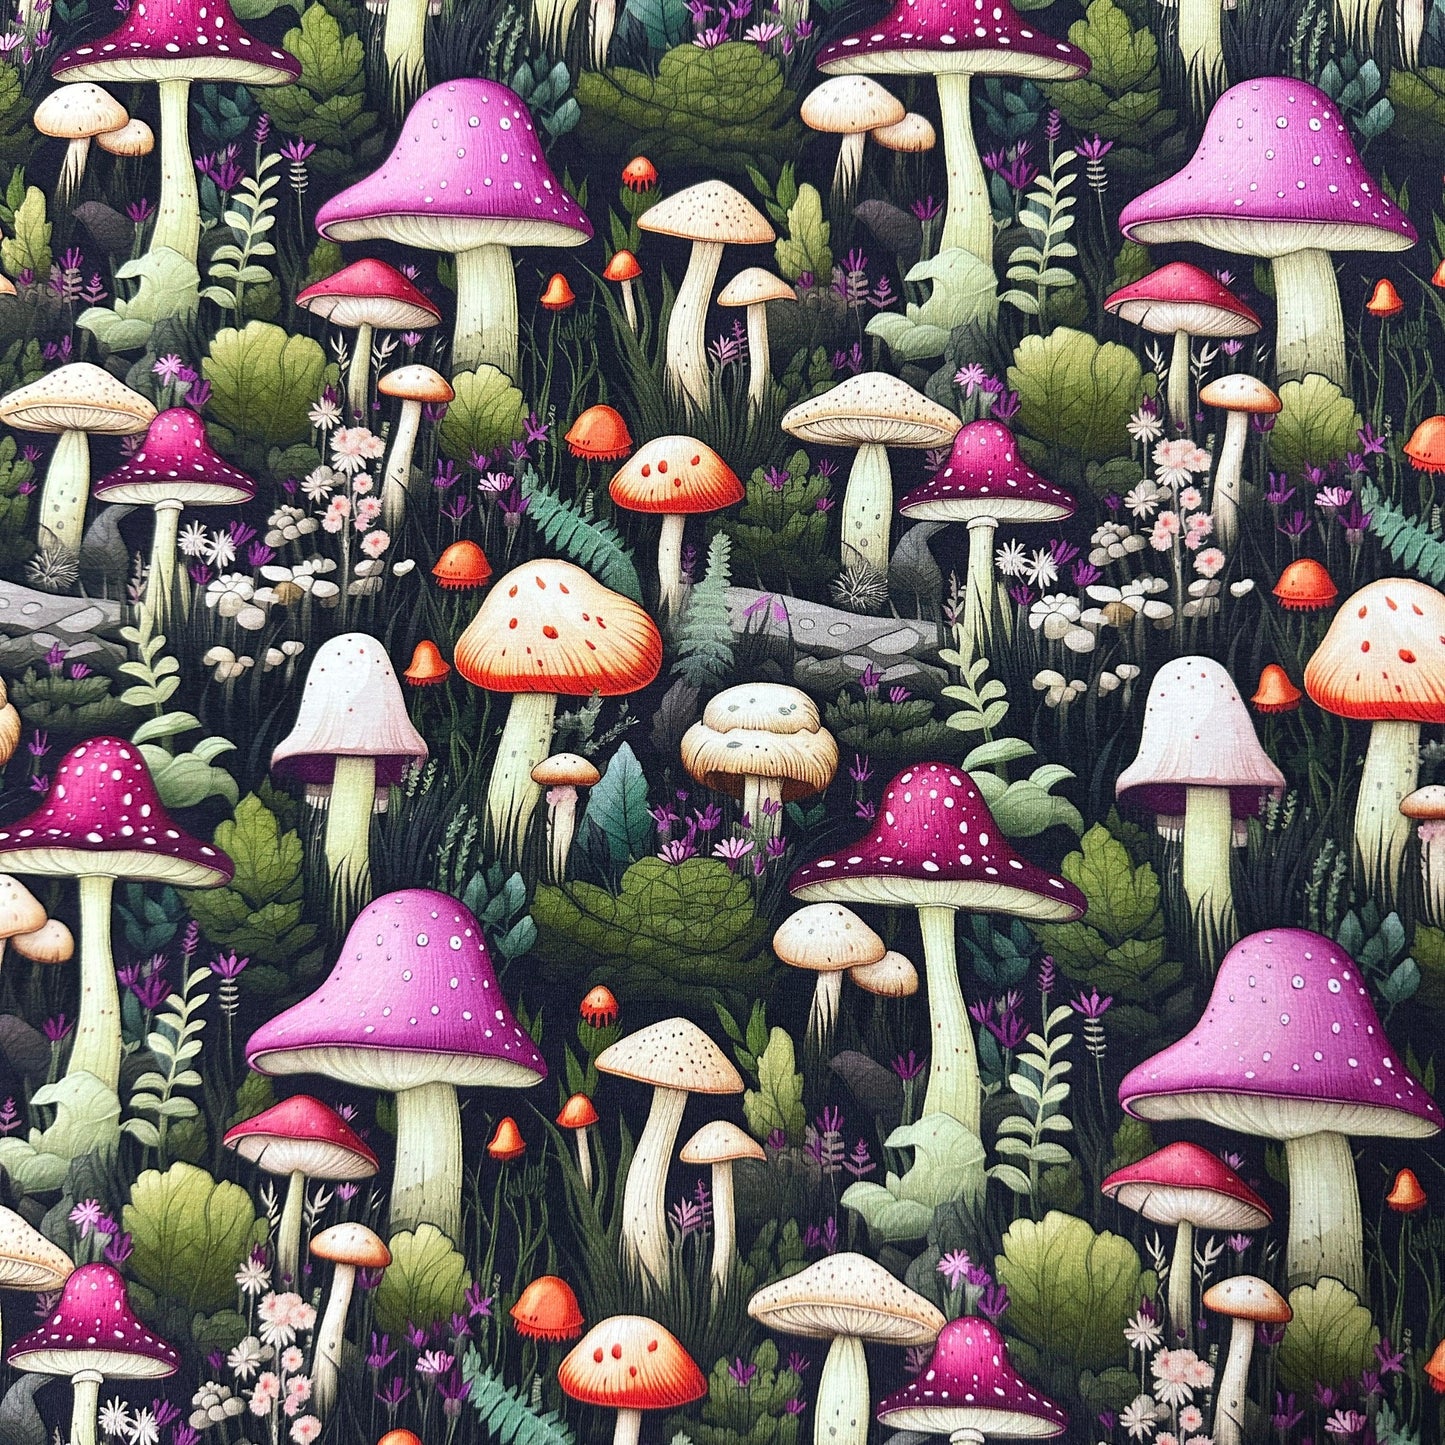 Pink Mushrooms on Bamboo/Spandex Jersey Fabric - Nature's Fabrics